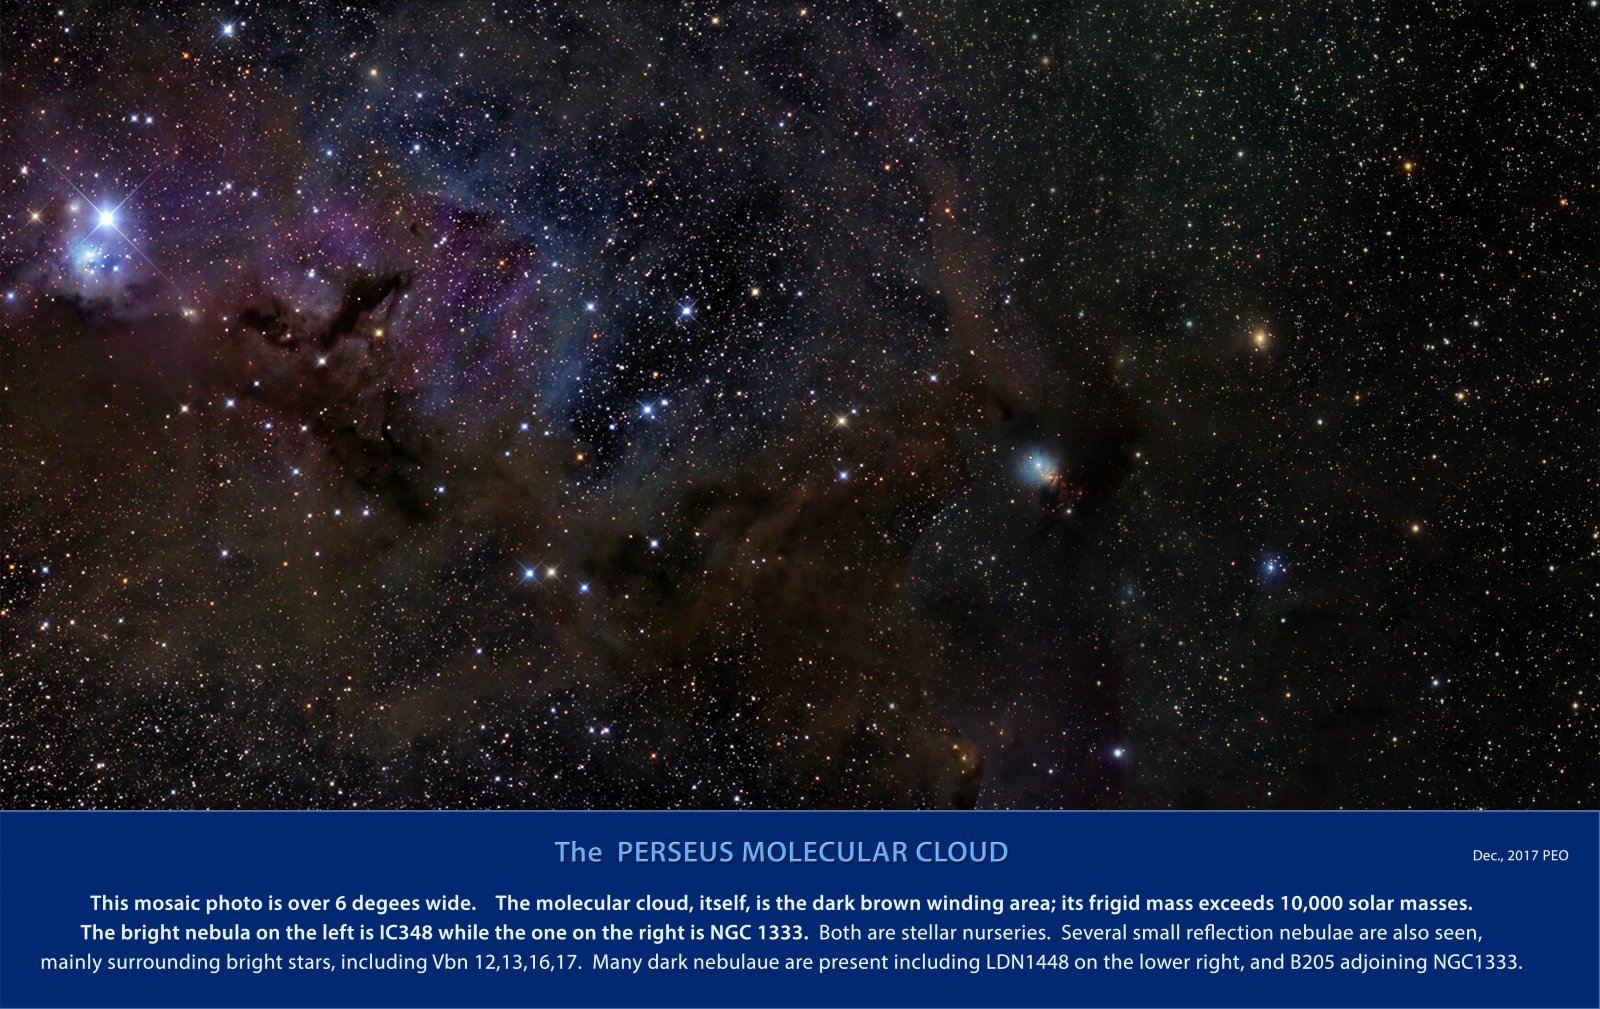 The Perseus Molecular Cloud